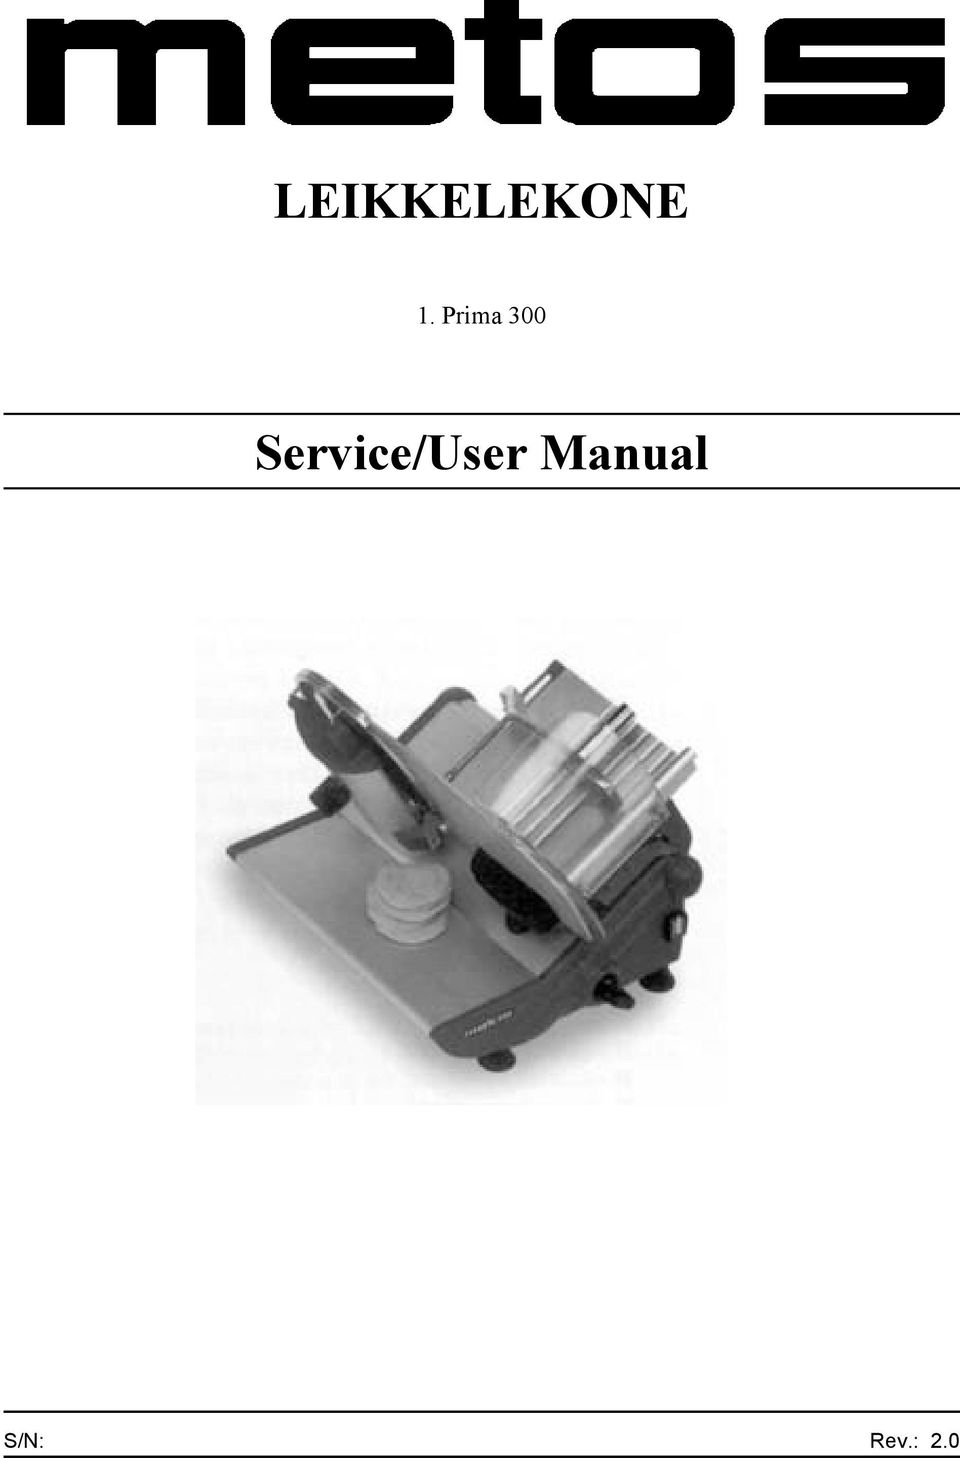 Service/User